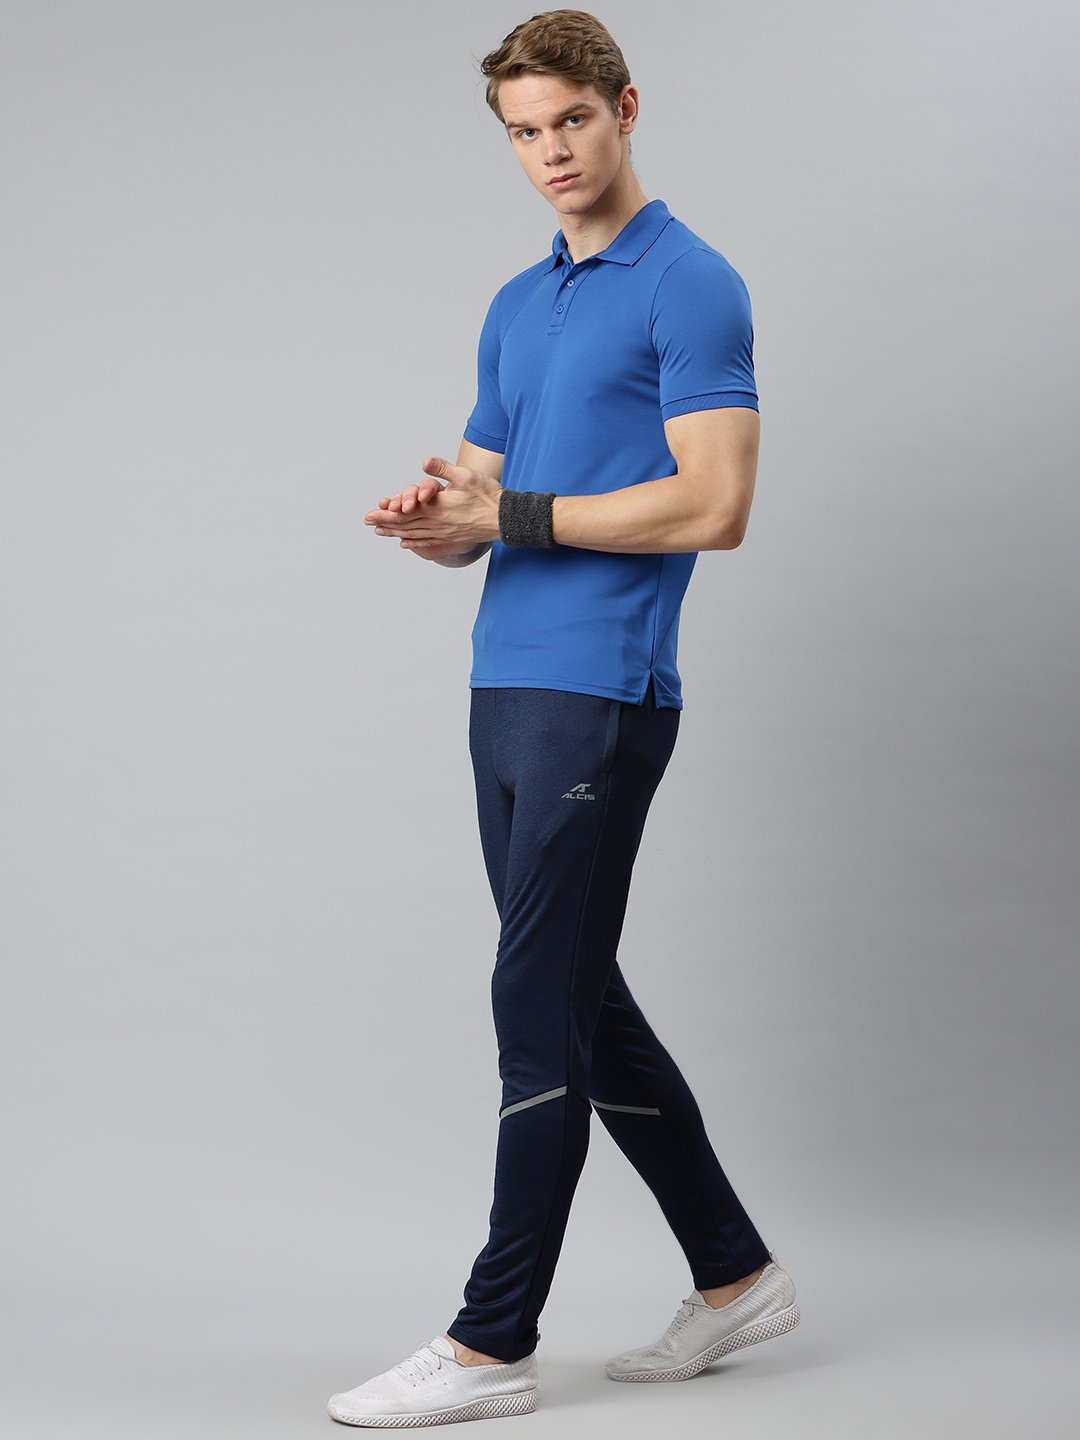 Alcis Men Navy Blue Solid Slim Fit Mid-Rise Track Pants